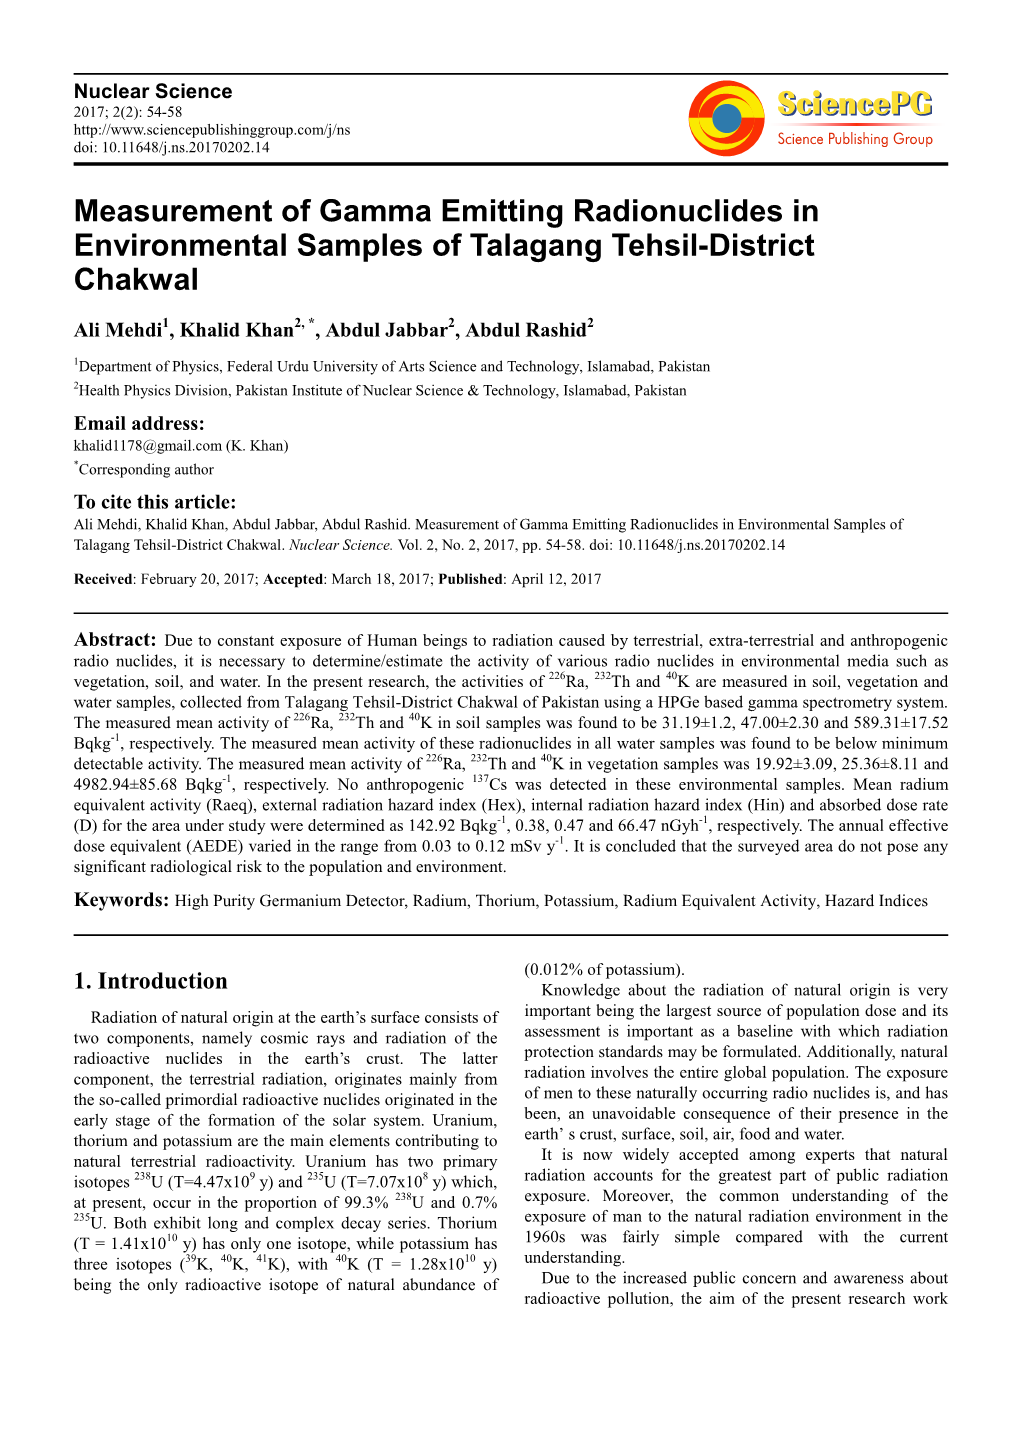 Measurement of Gamma Emitting Radionuclides in Environmental Samples of Talagang Tehsil-District Chakwal